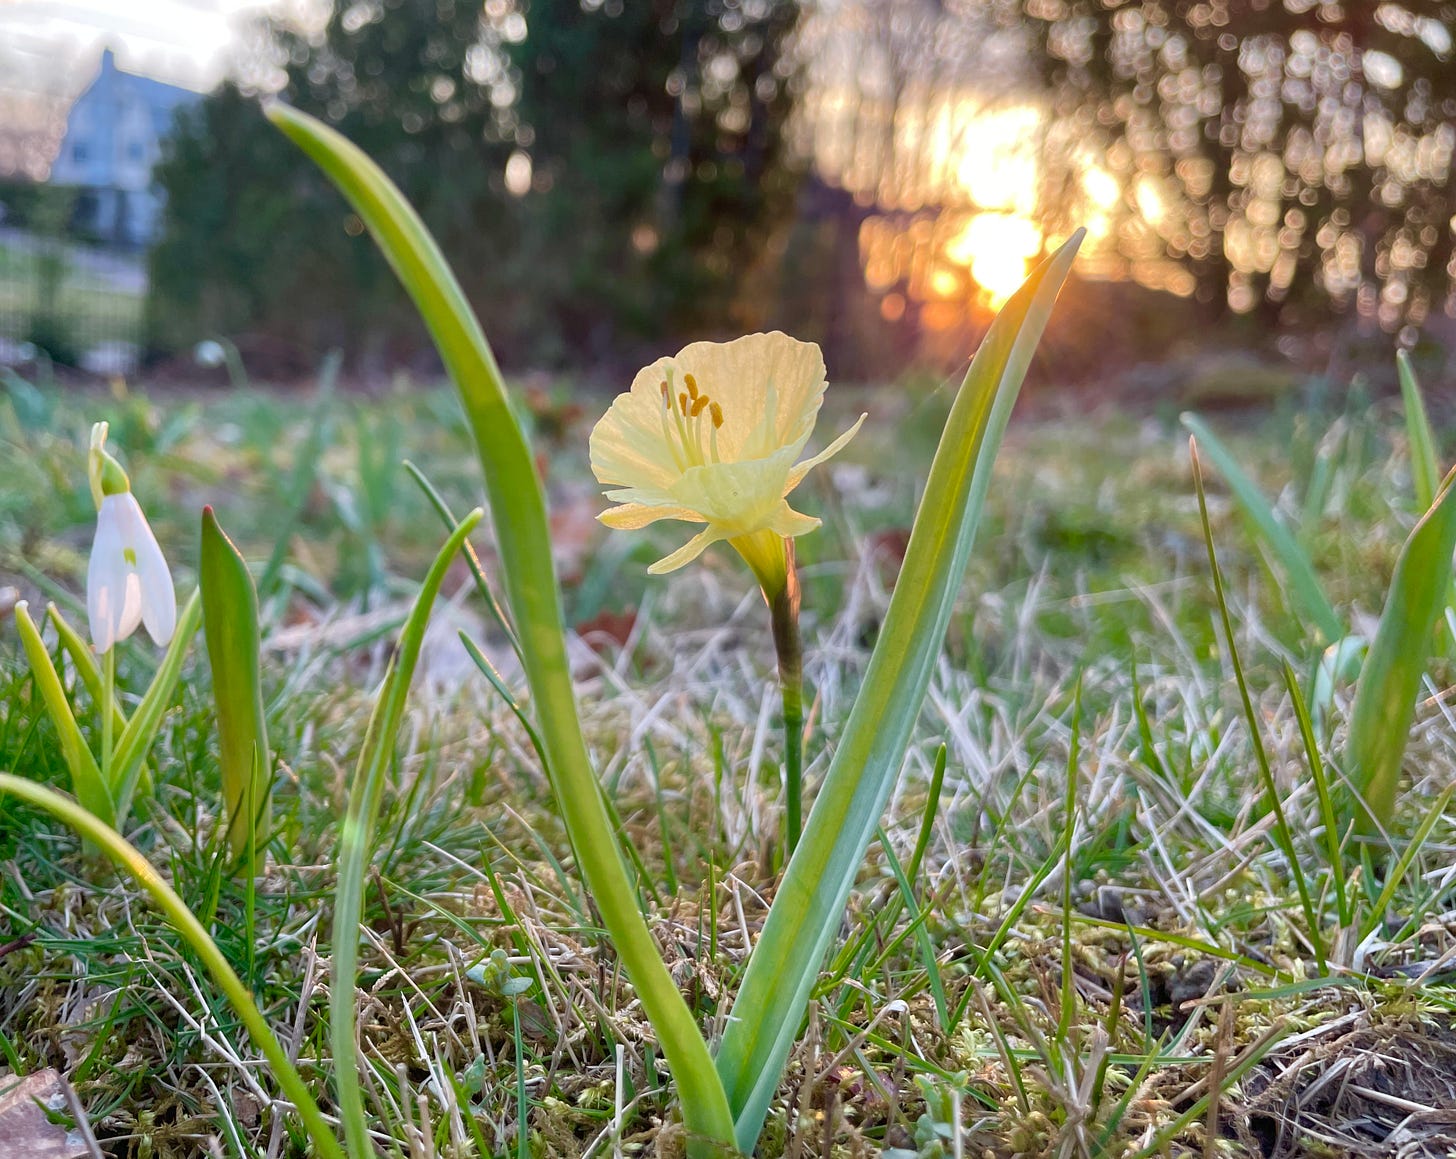 Daffodil ‘Julia Jane’ seems happy so far in the turf of the Birch Walk. 